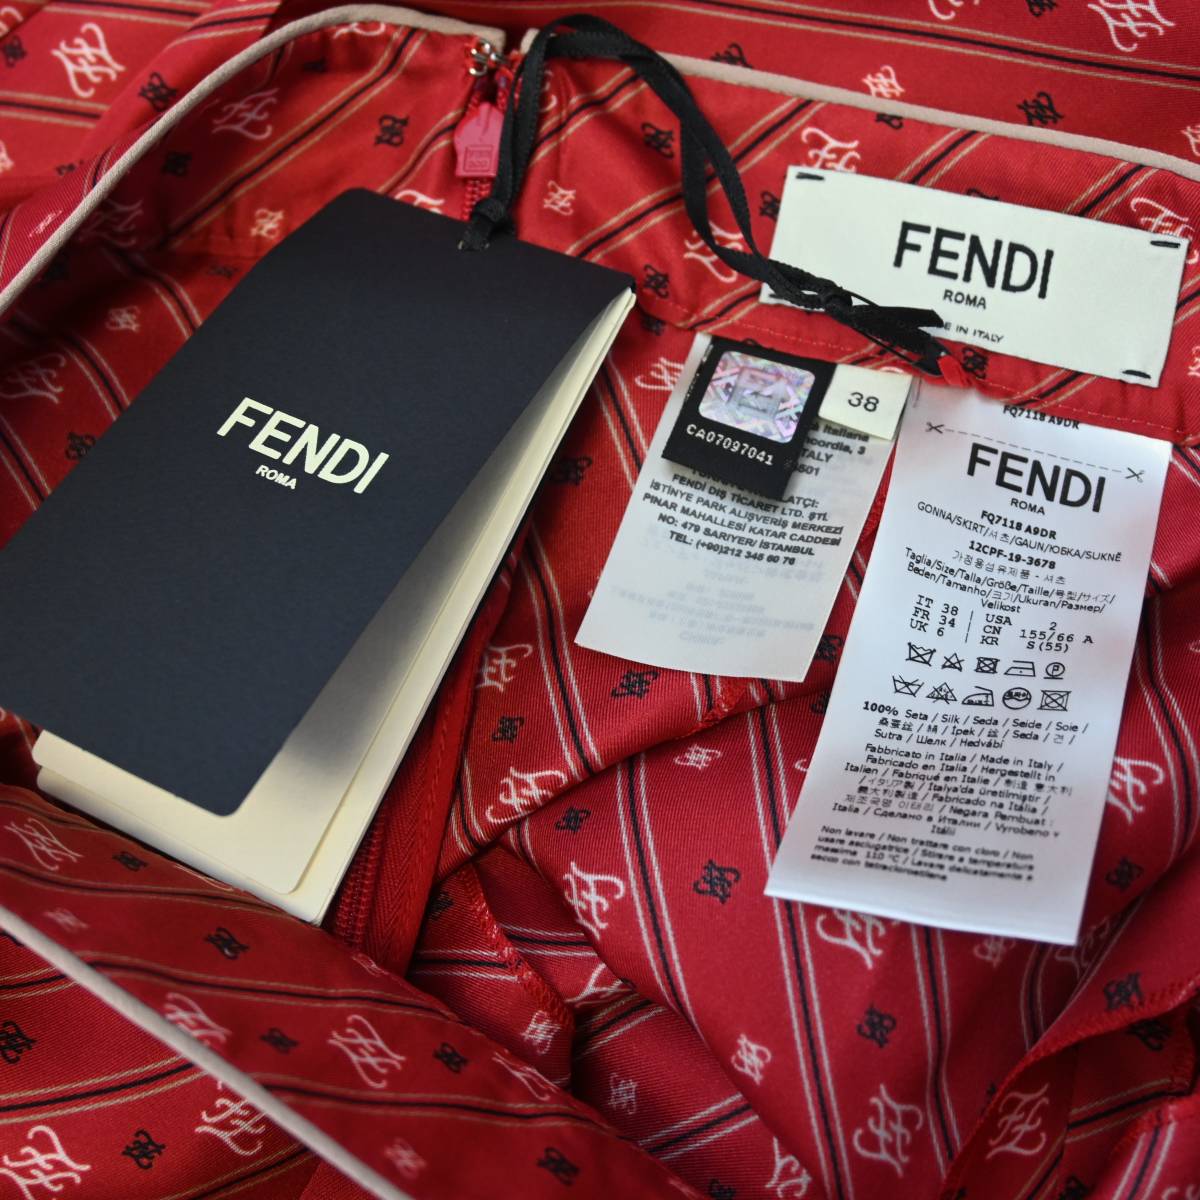  неиспользованный товар   ... FENDI  юбка  FQ7118 A9DR  размер  38